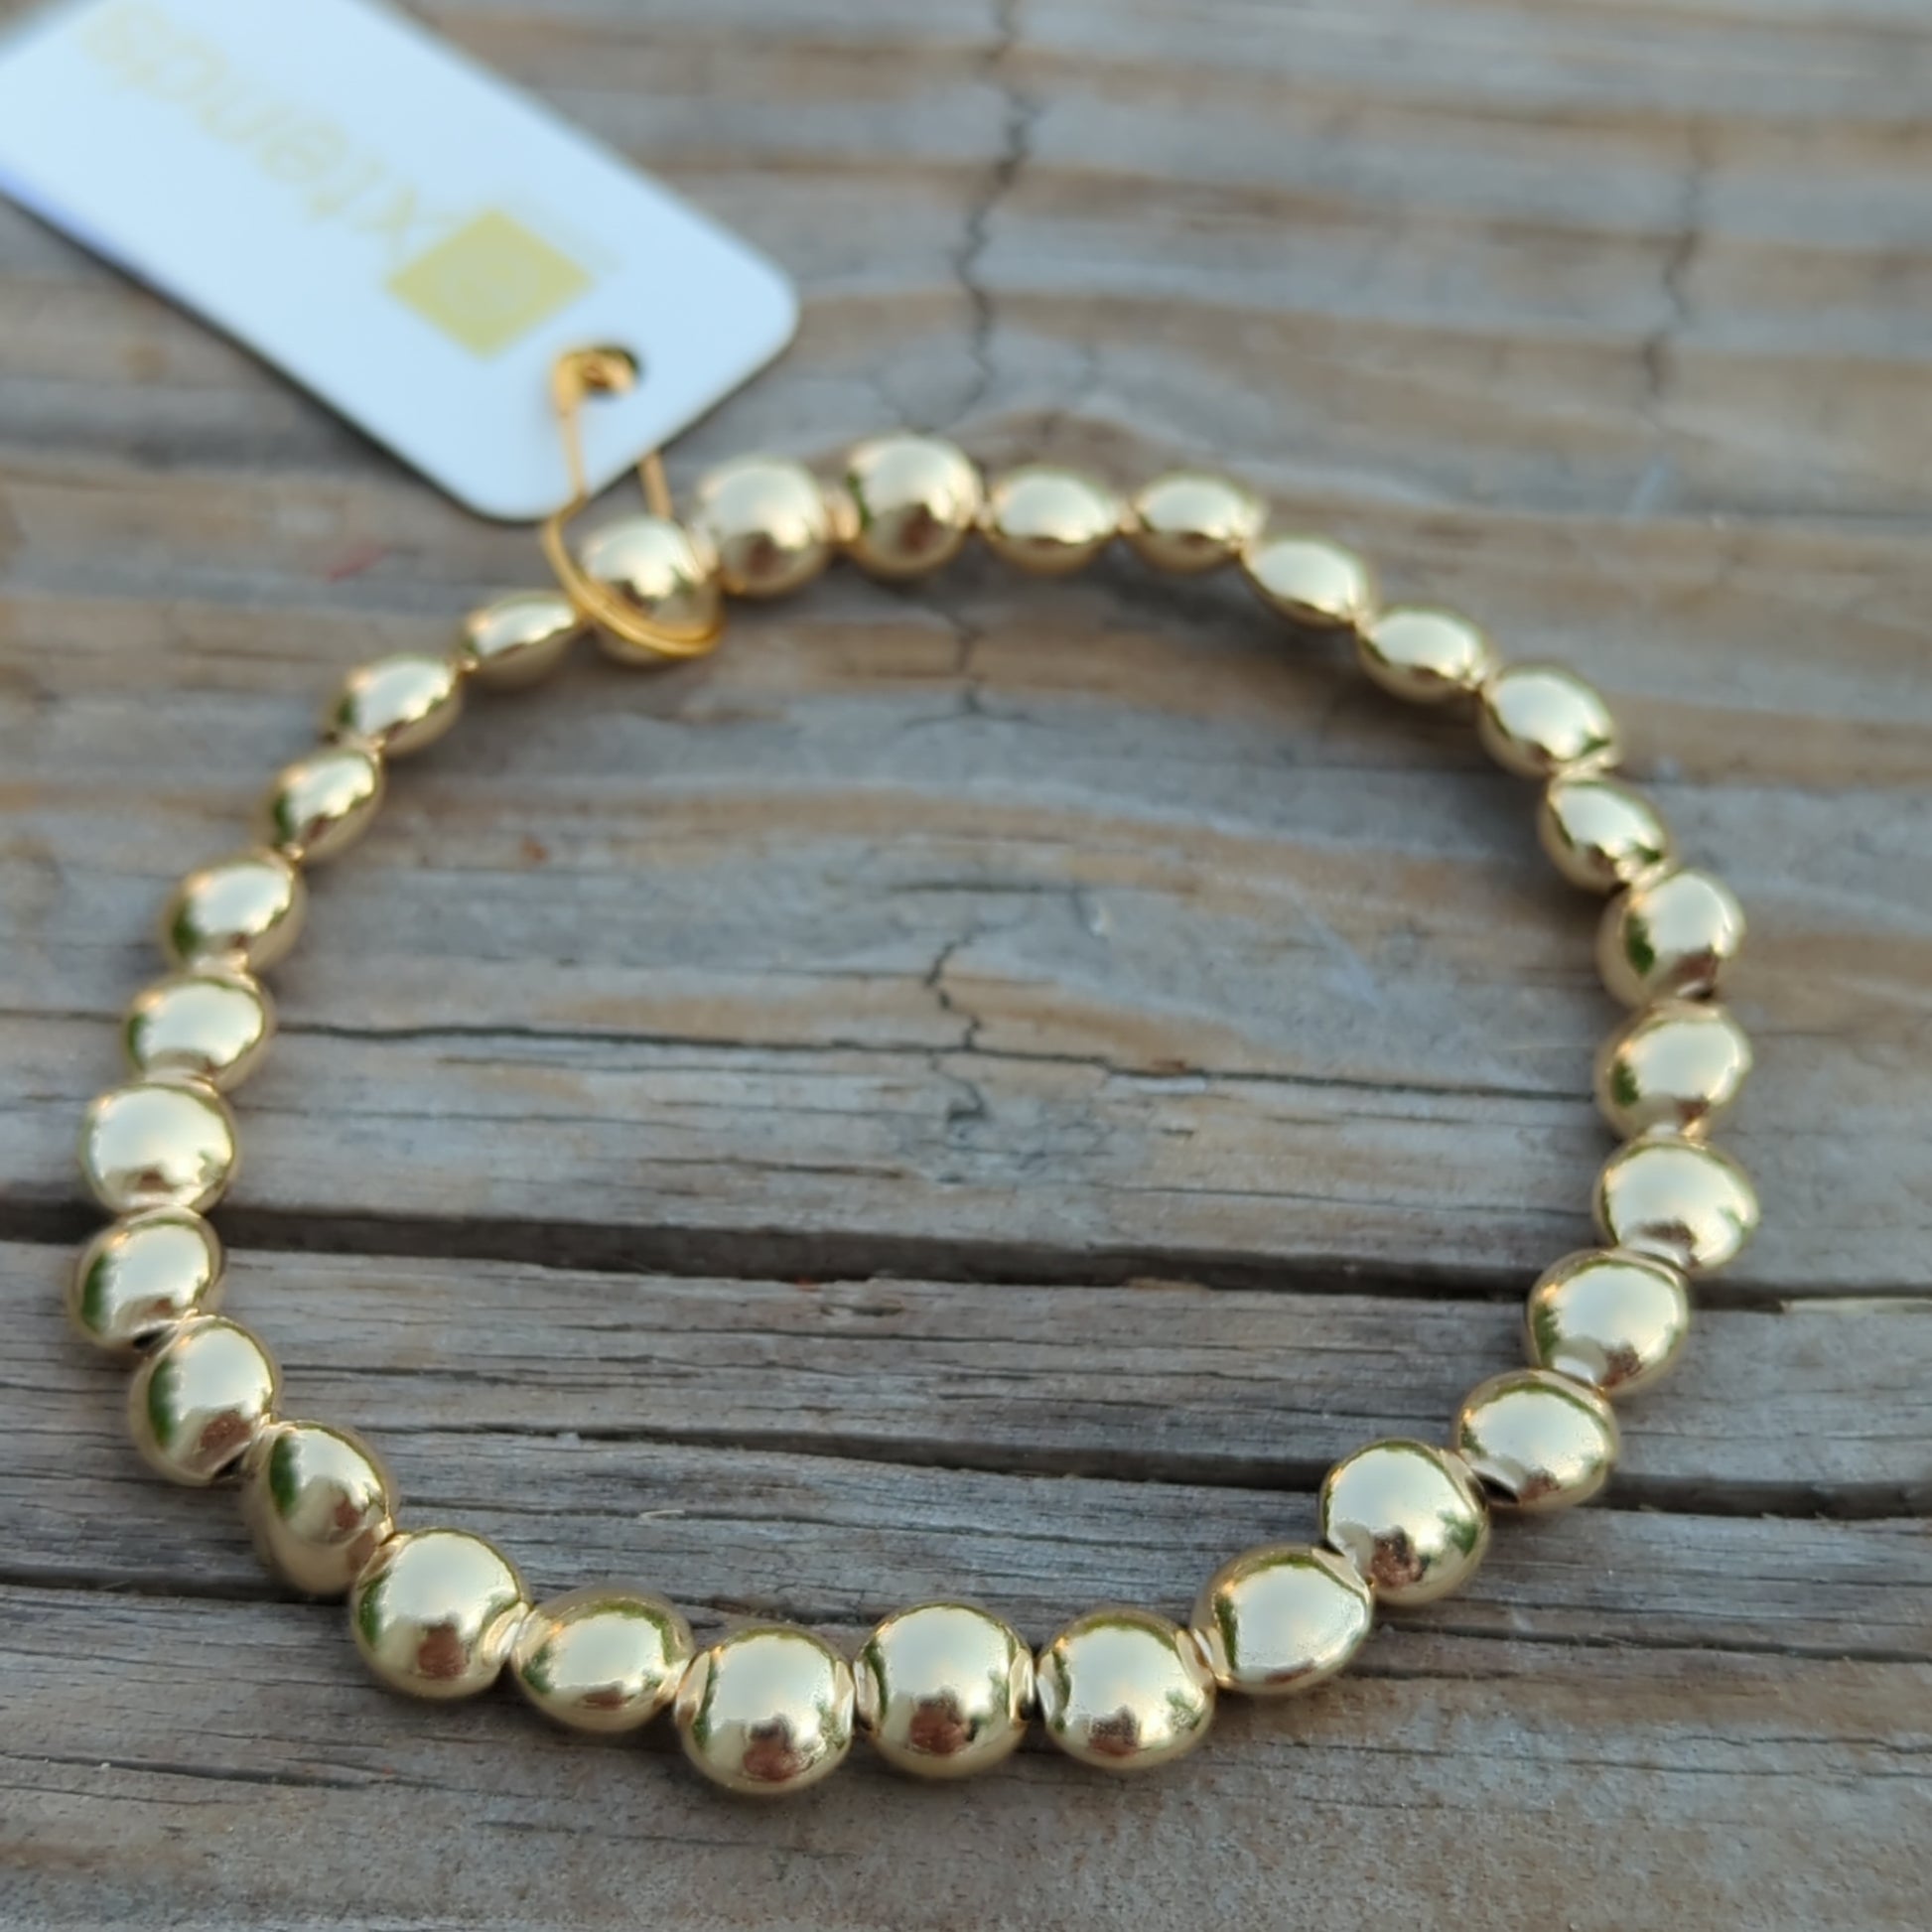 Enewton classic gold 8mm bead bracelet